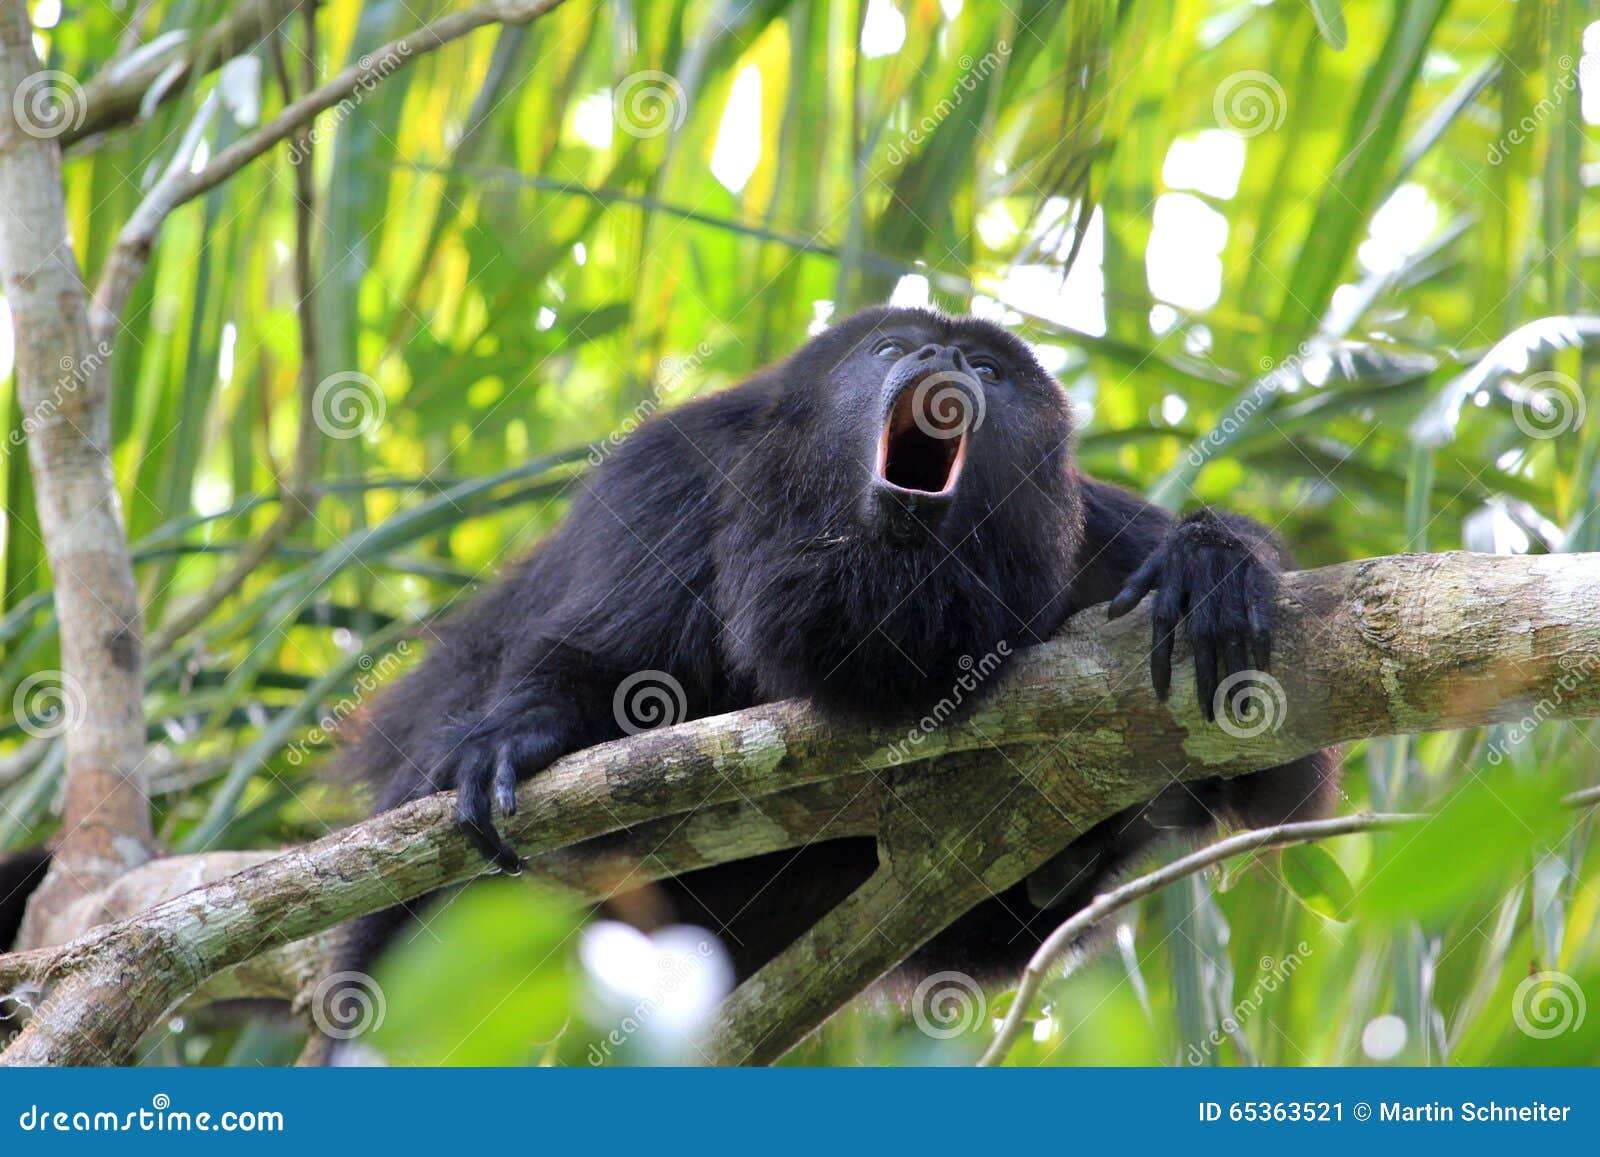 black howler monkey, in belize, howling